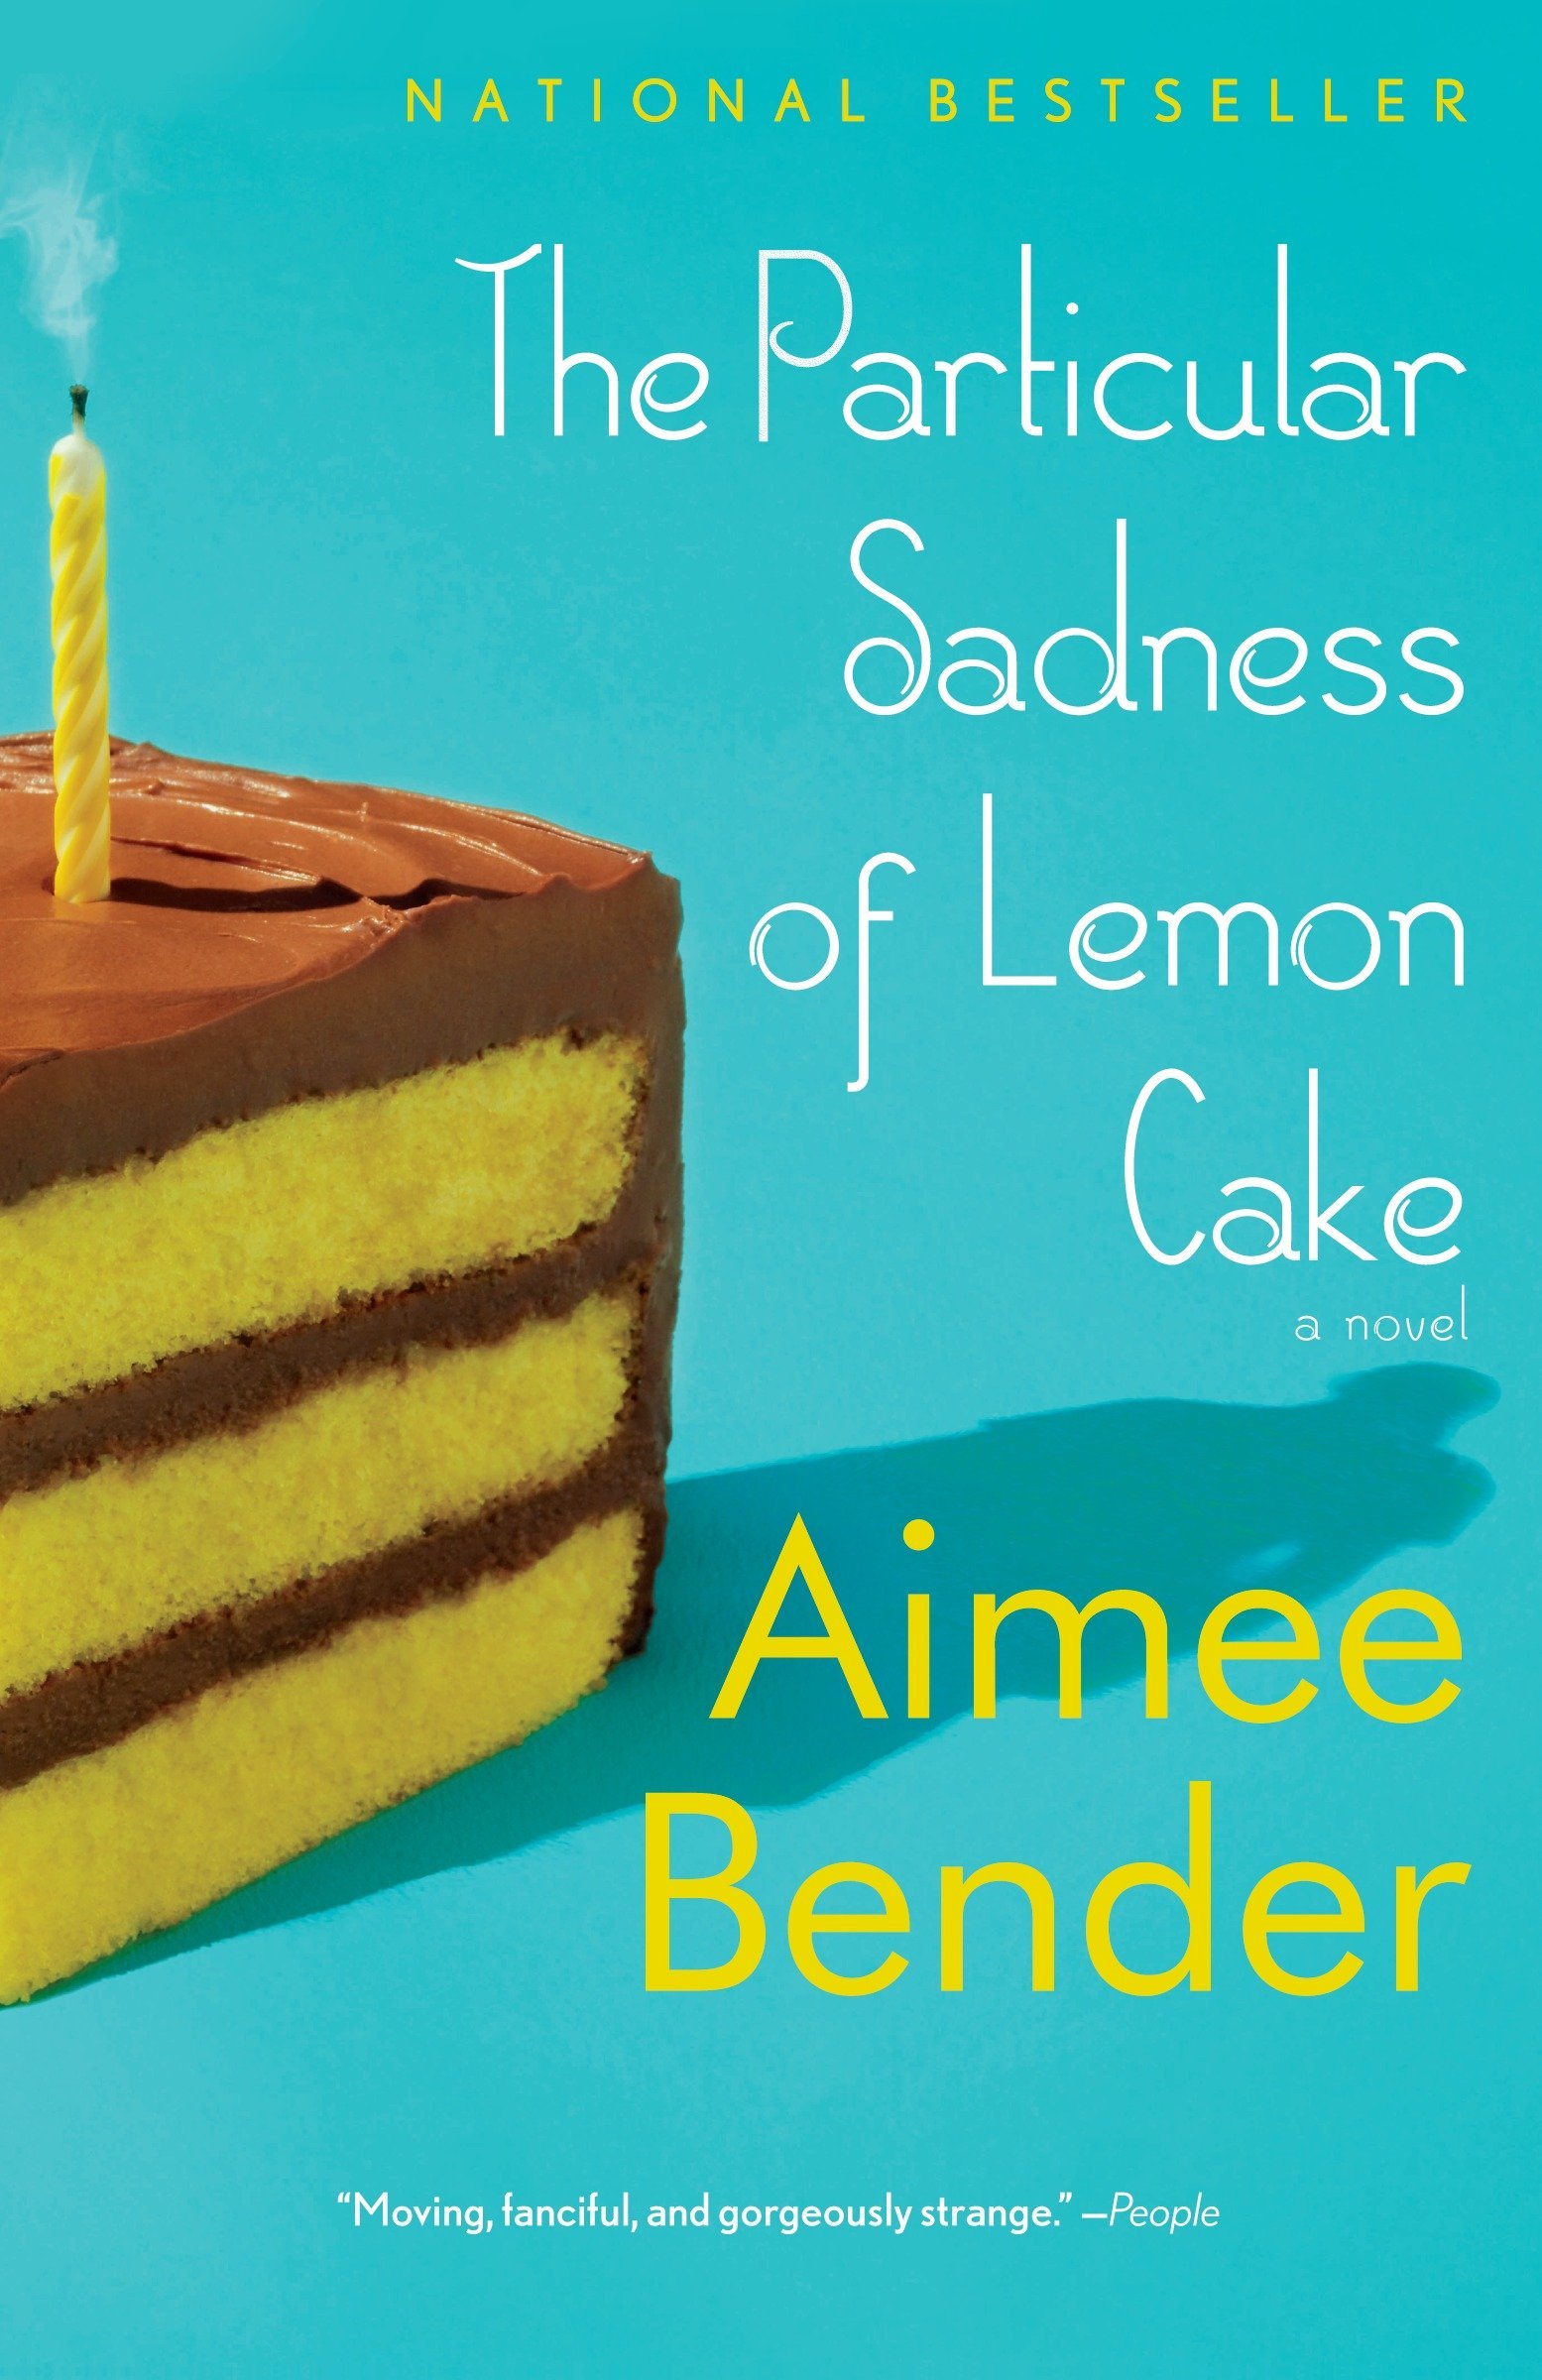 The Particular Sadness of Lemon Cake Cover